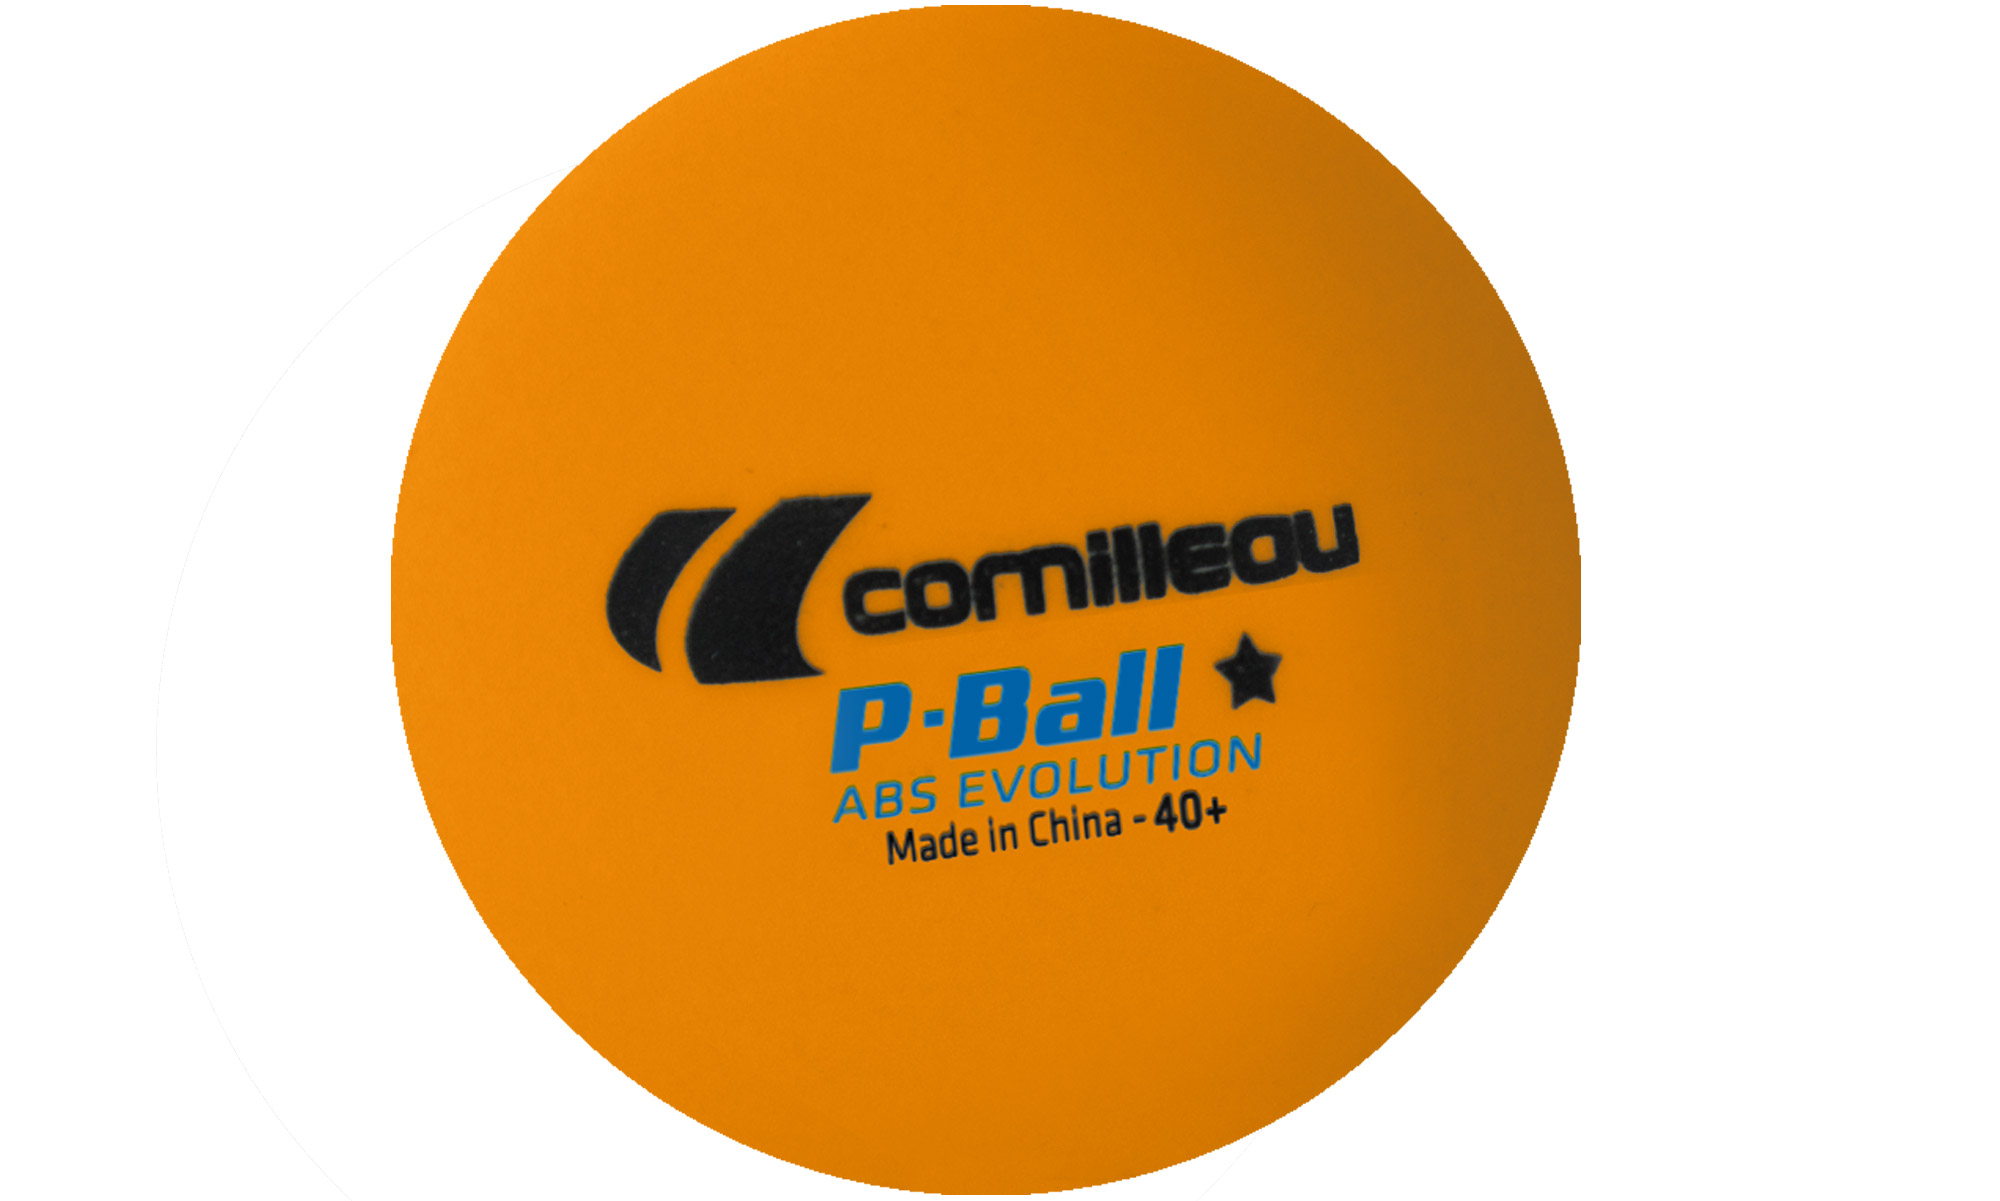 Cornilleau P-Balls ABS Evolution 1 Star Balls - Box of 72